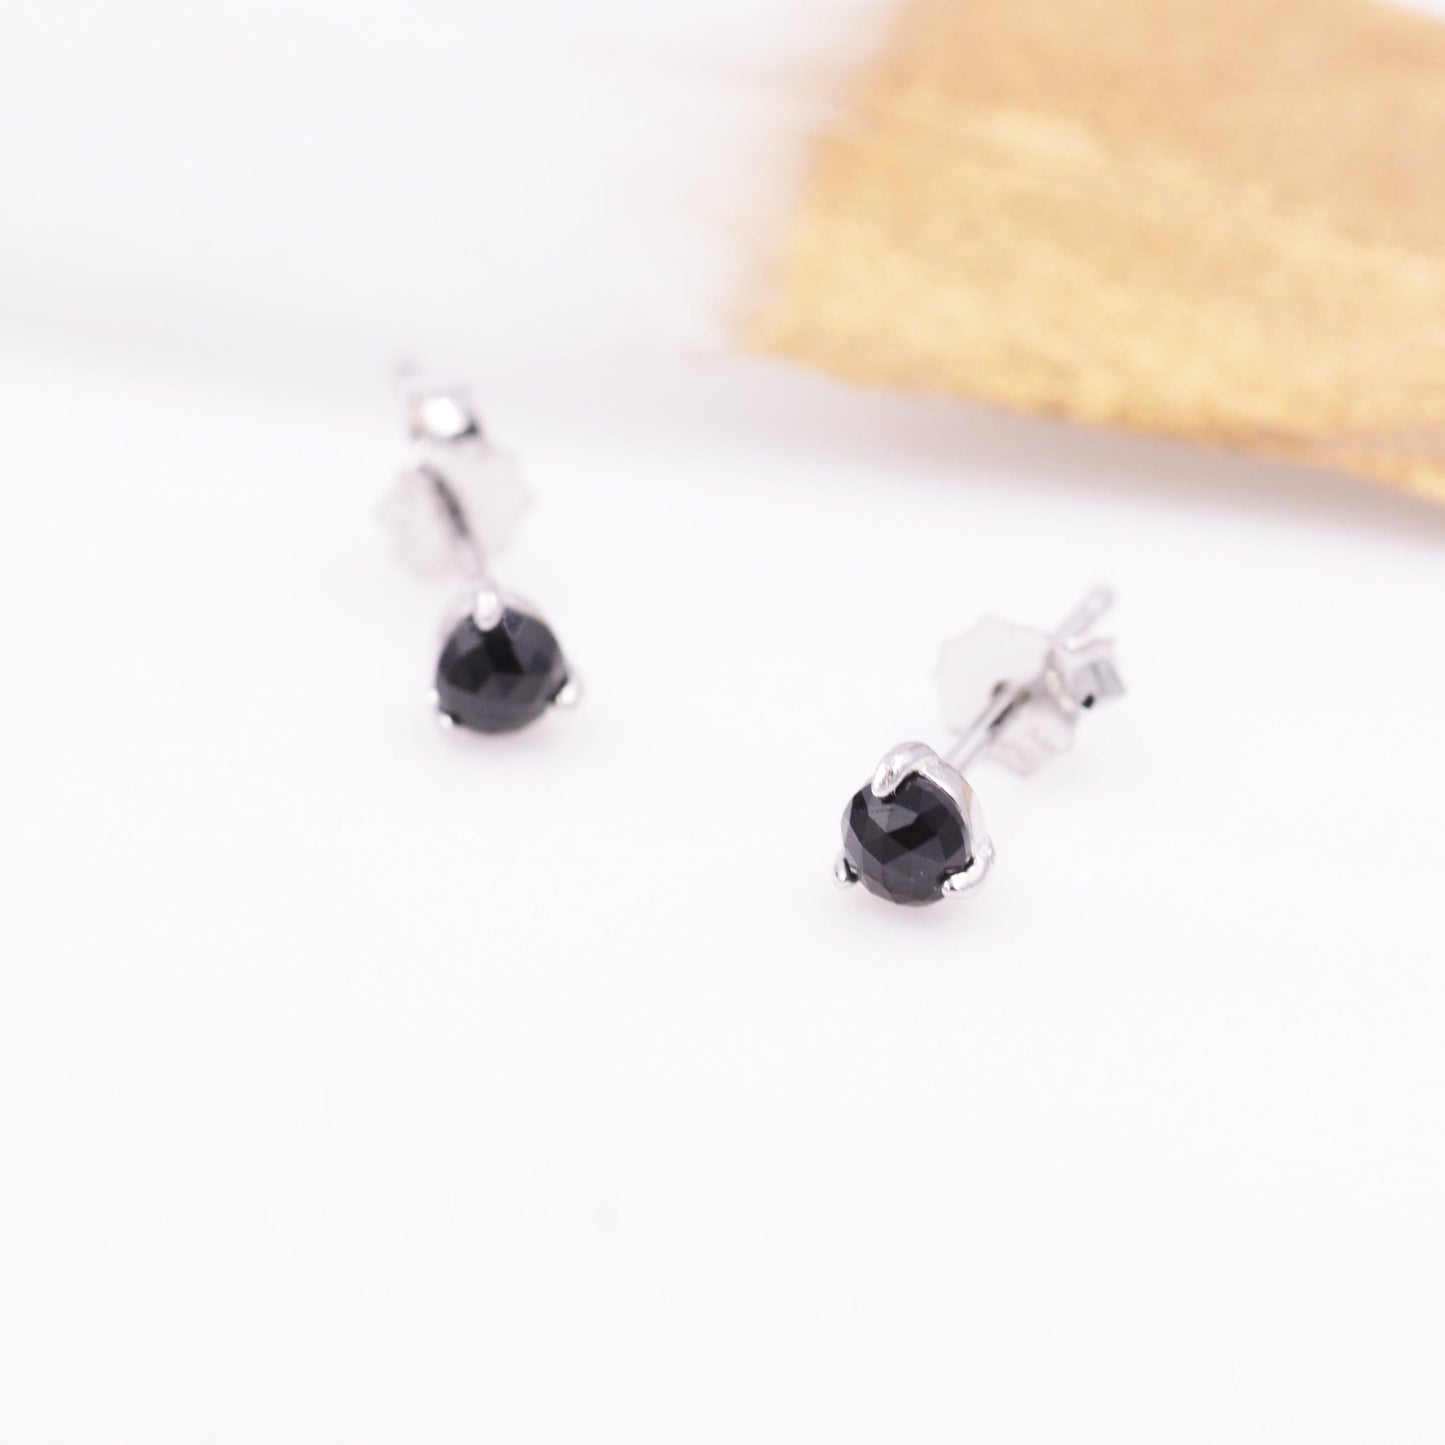 Genuine Black Spinel 3mm Tiny Stud Earrings in Sterling Silver, Rose Cut, Real Semi-precious Gemstone, Simple, Minimalist, Discreet